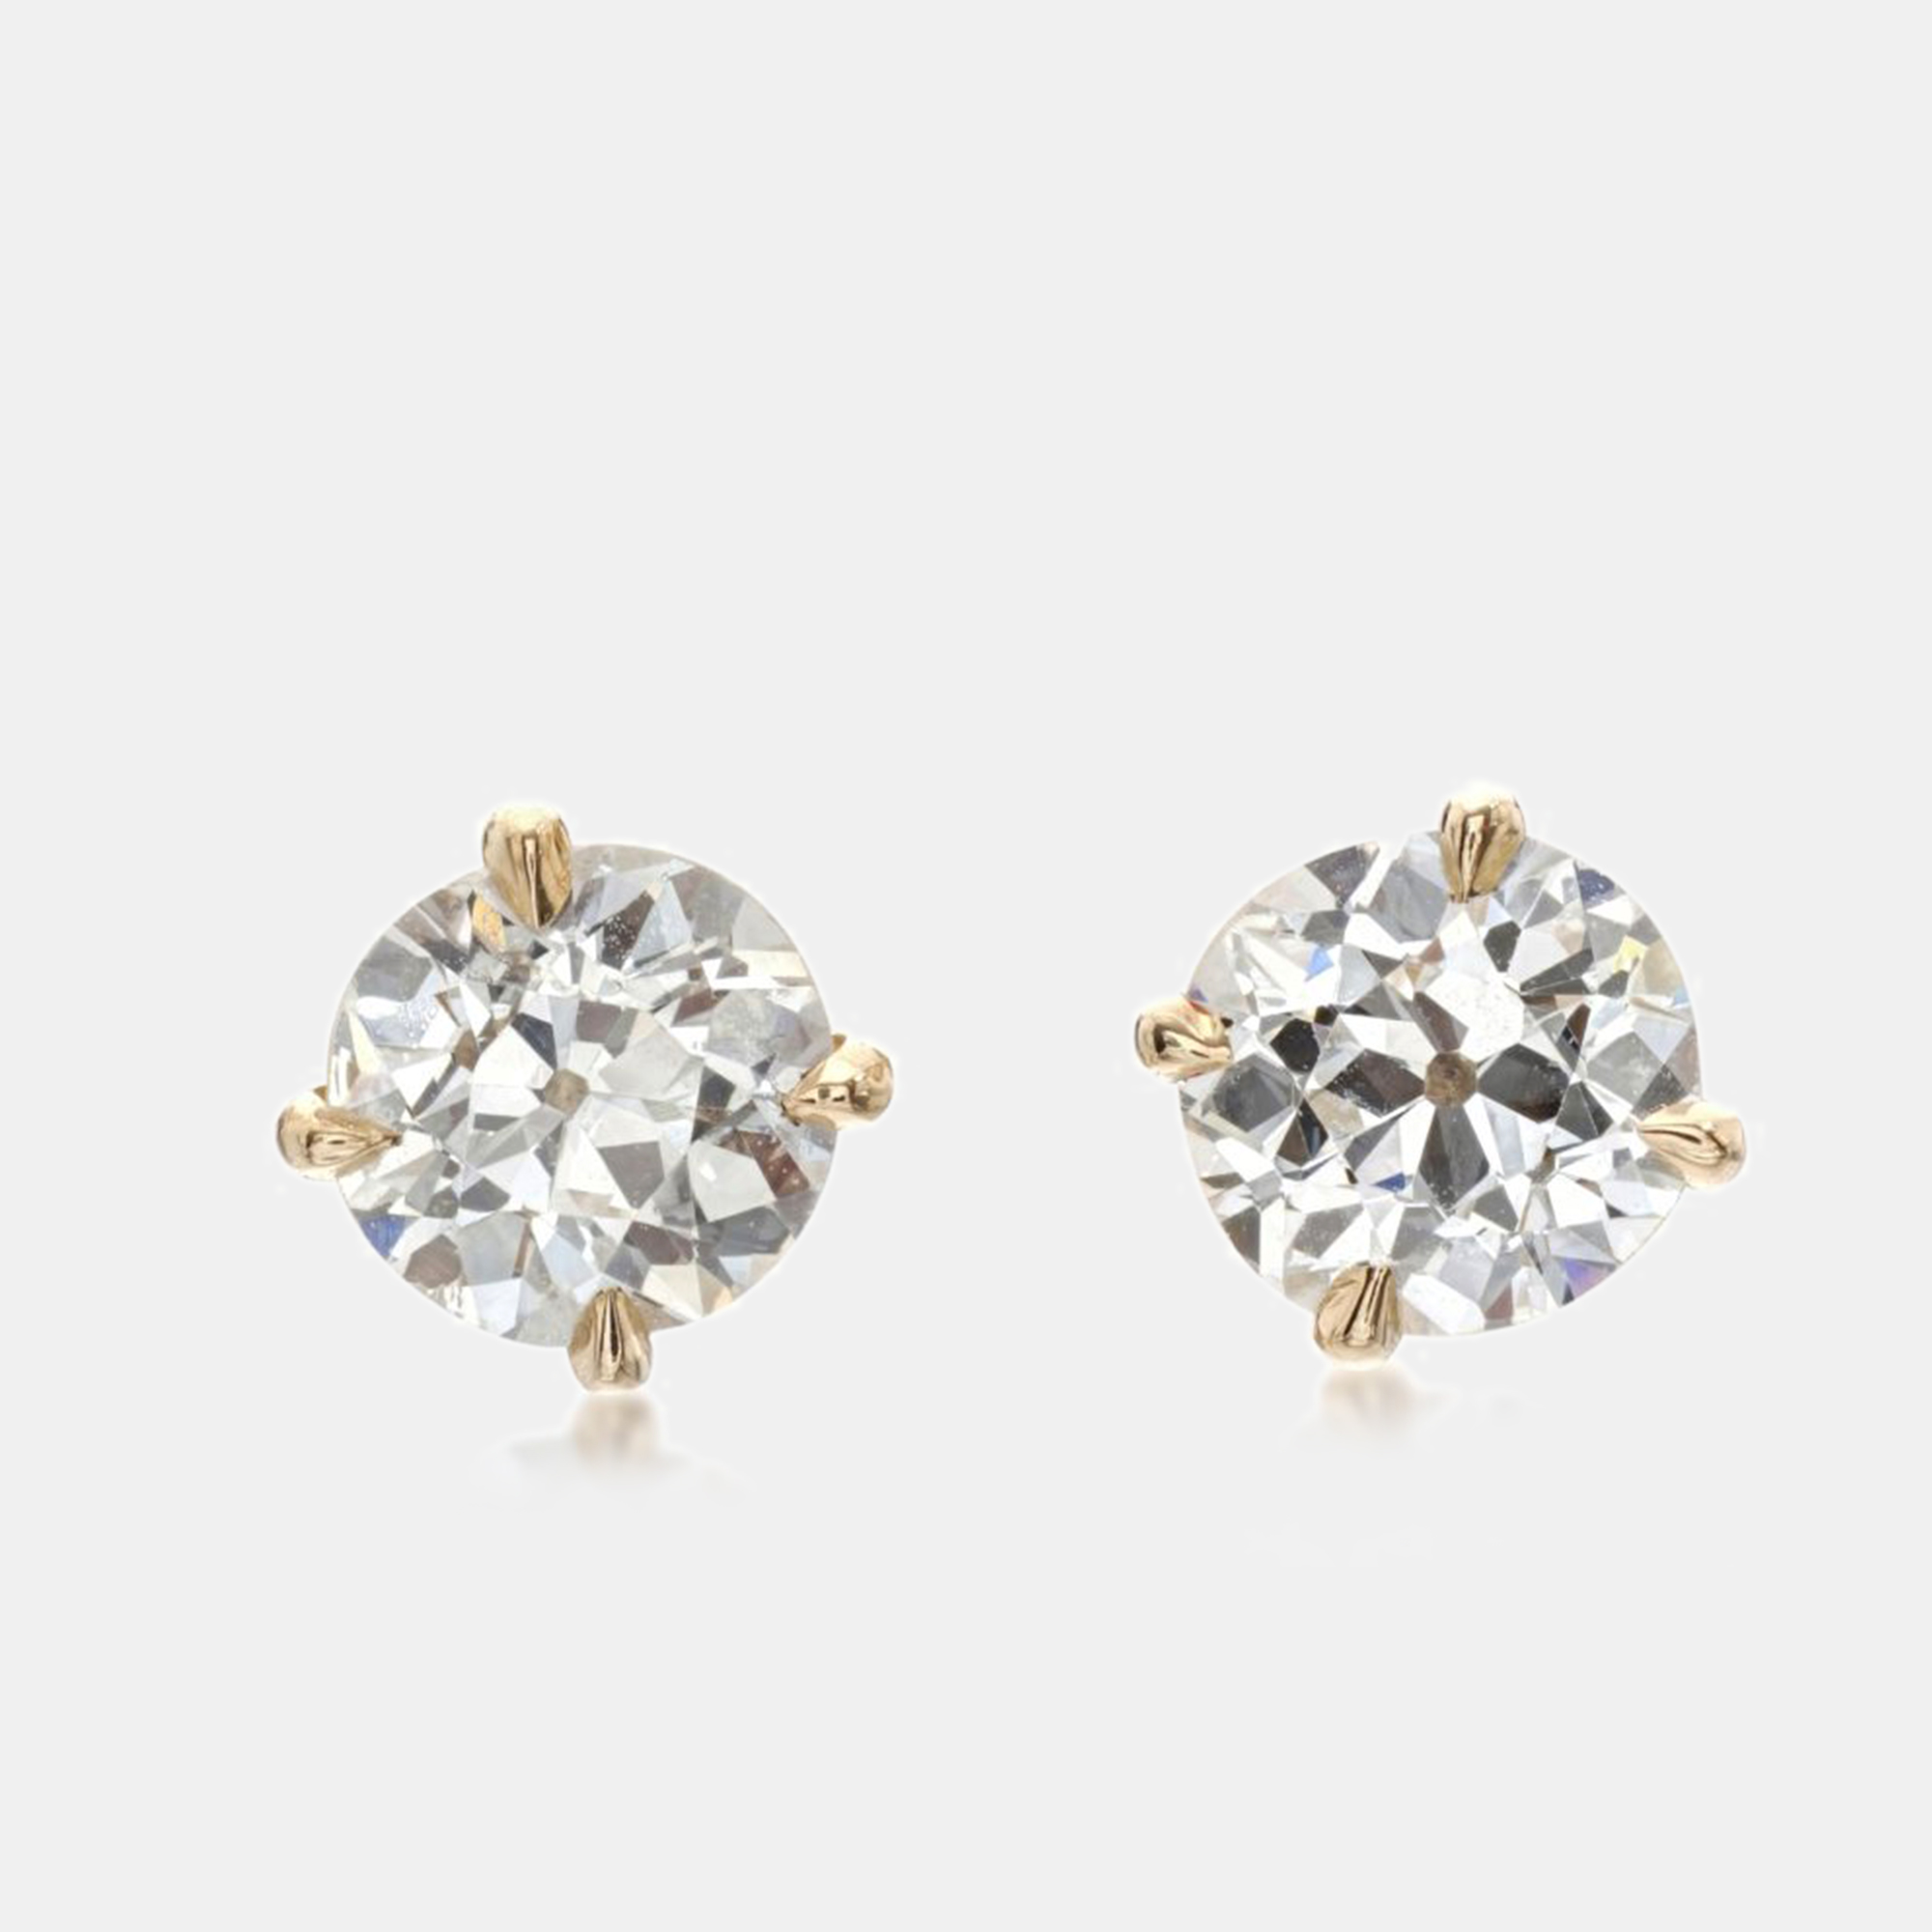 The diamond edit 18k yellow gold diamonds 0.66 ct. stud earrings